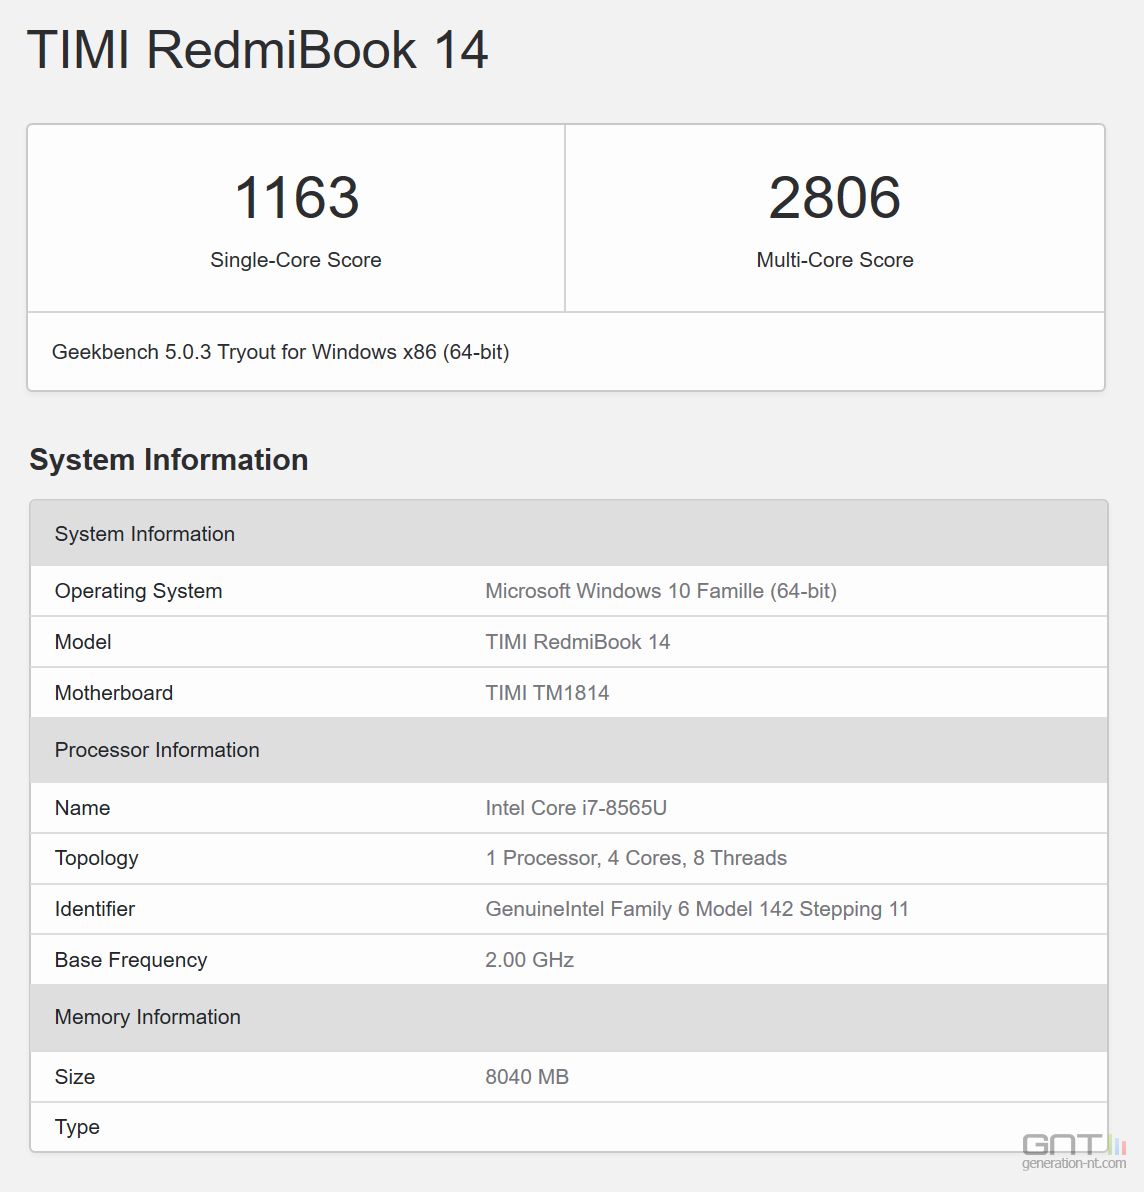 RedmiBook 14 - Geekbench CPU Score